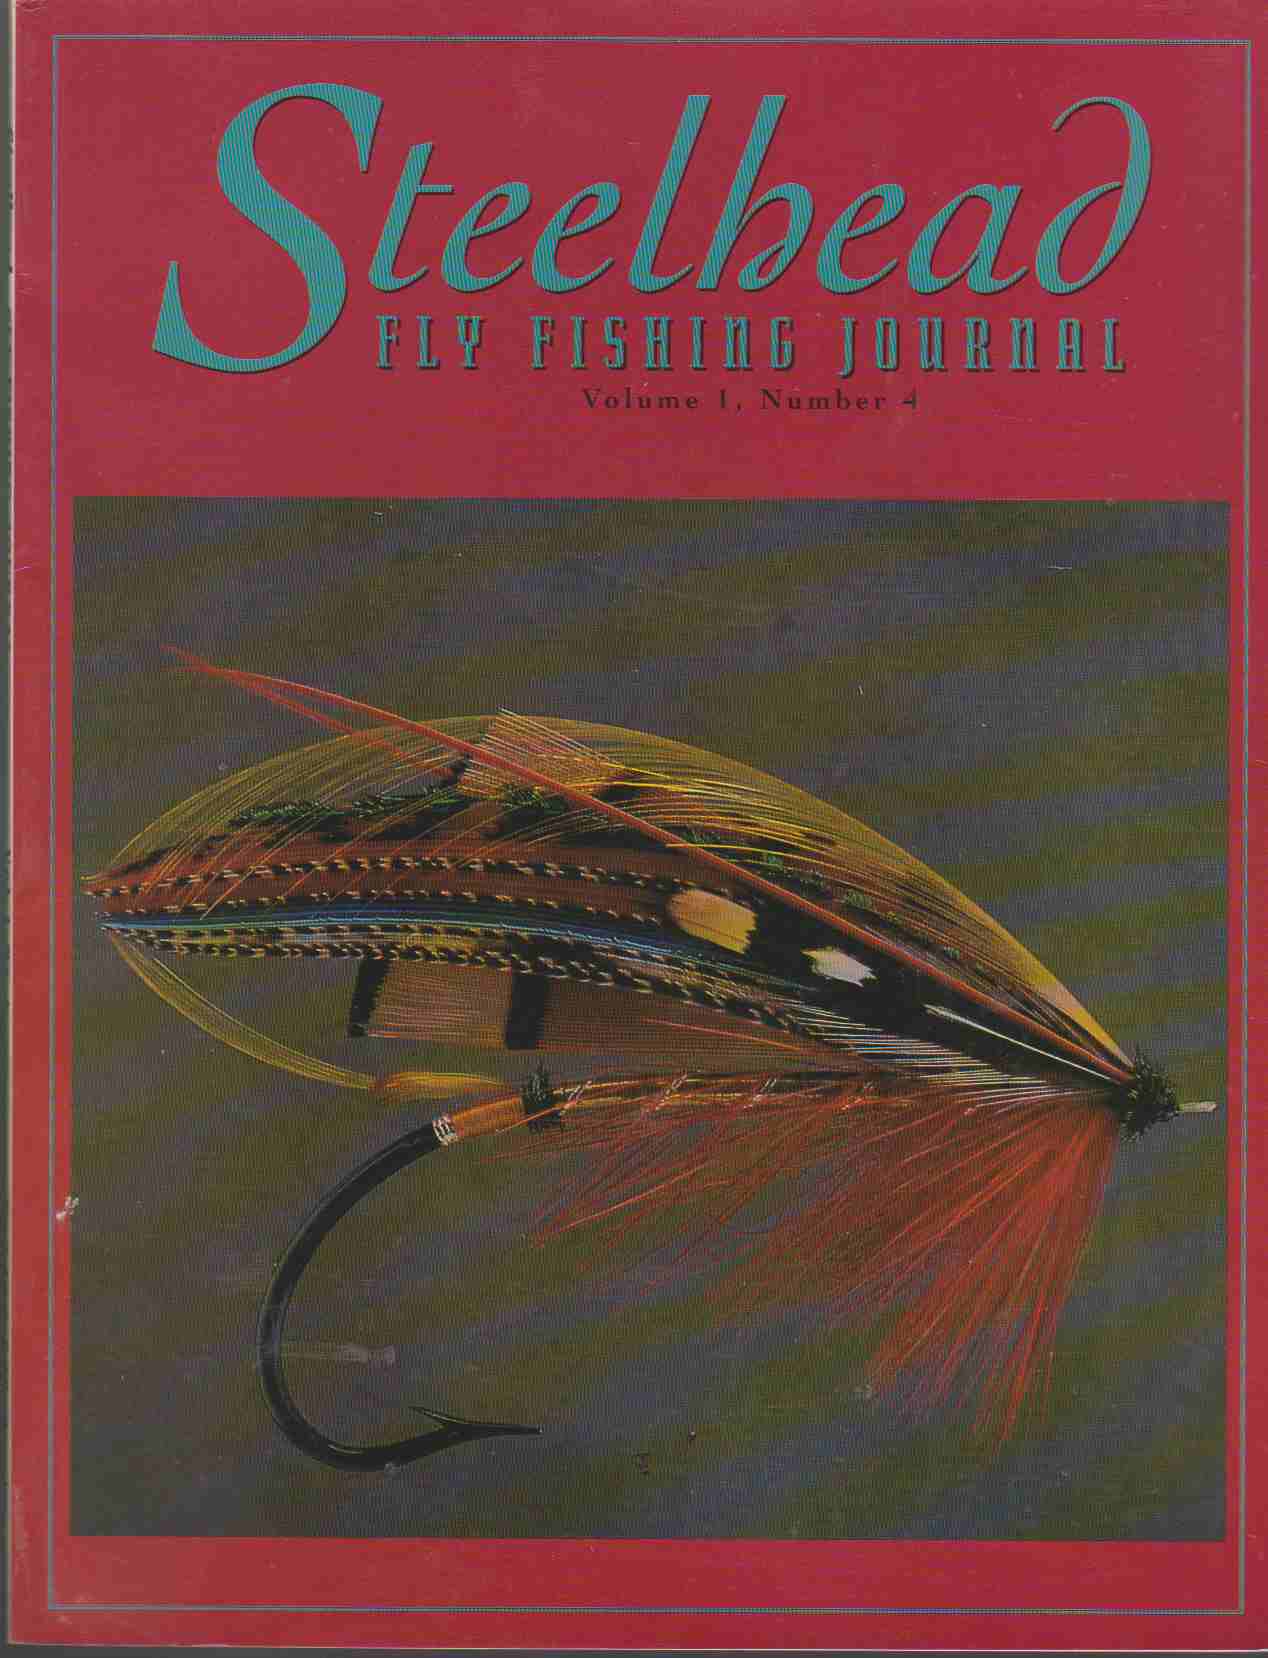 STEELHEAD FLY FISHING JOURNAL VOL 1, NO 4